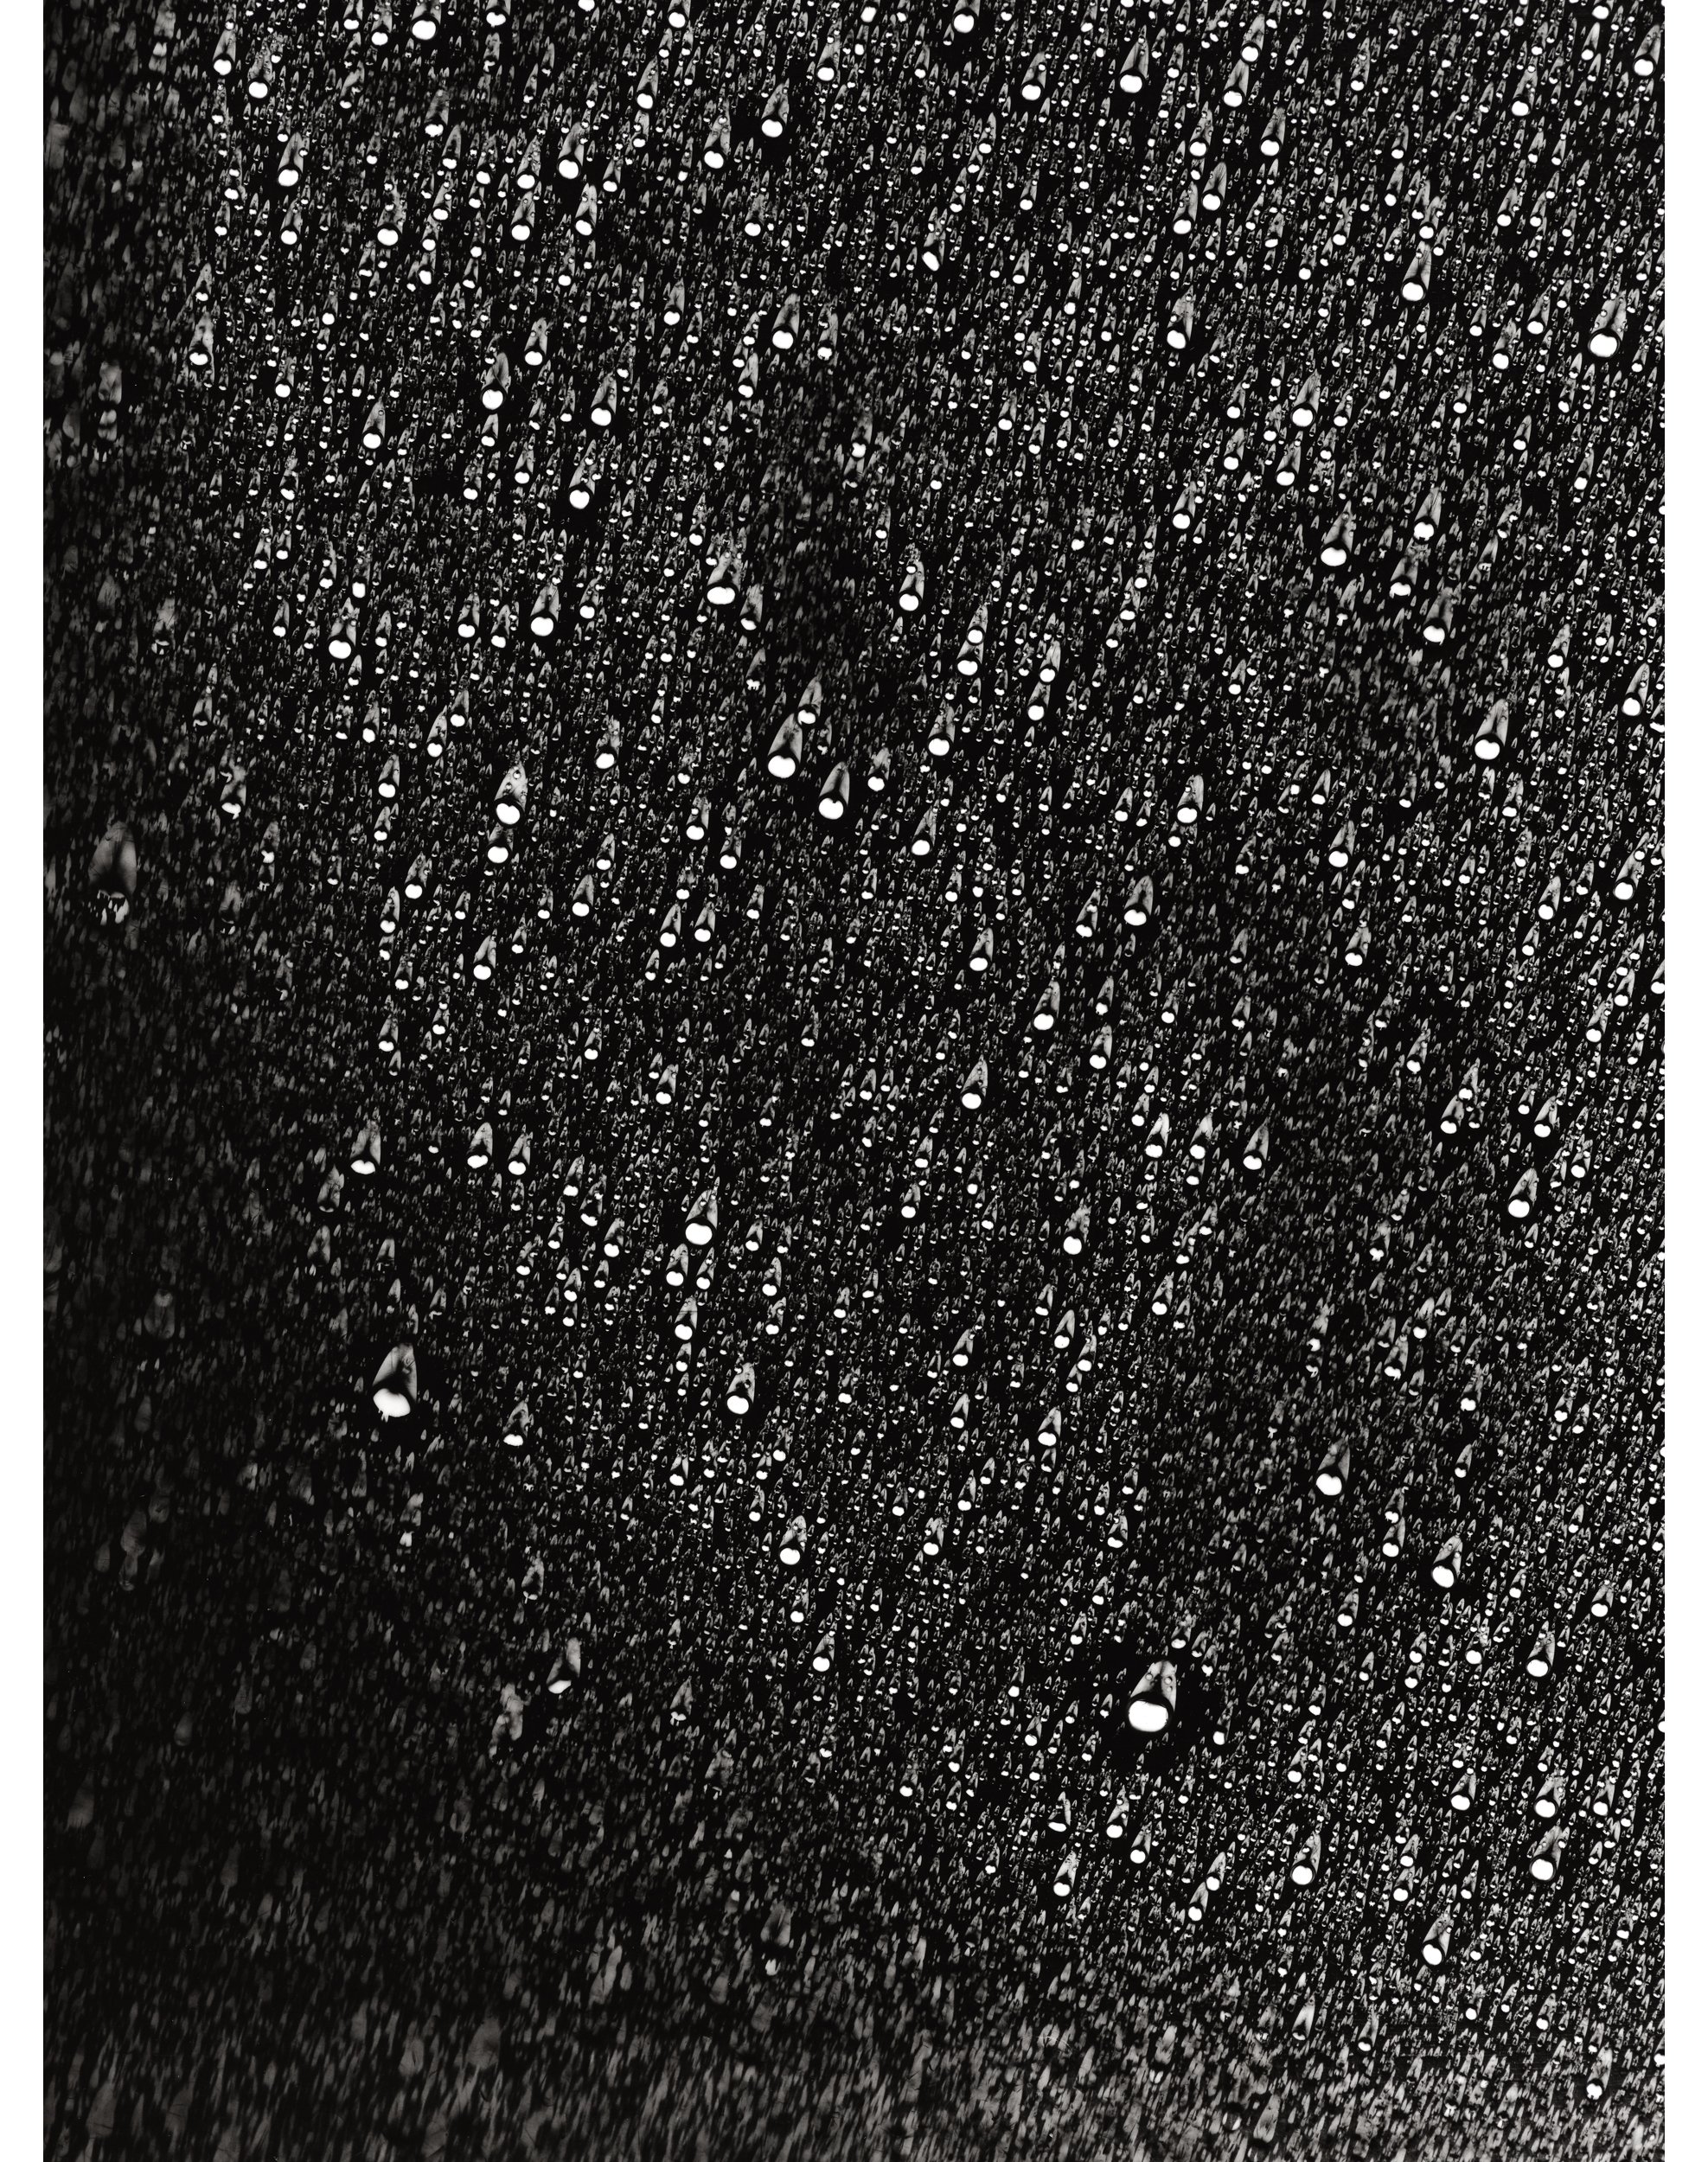   Rain Study (Kona 7)  (detail) 